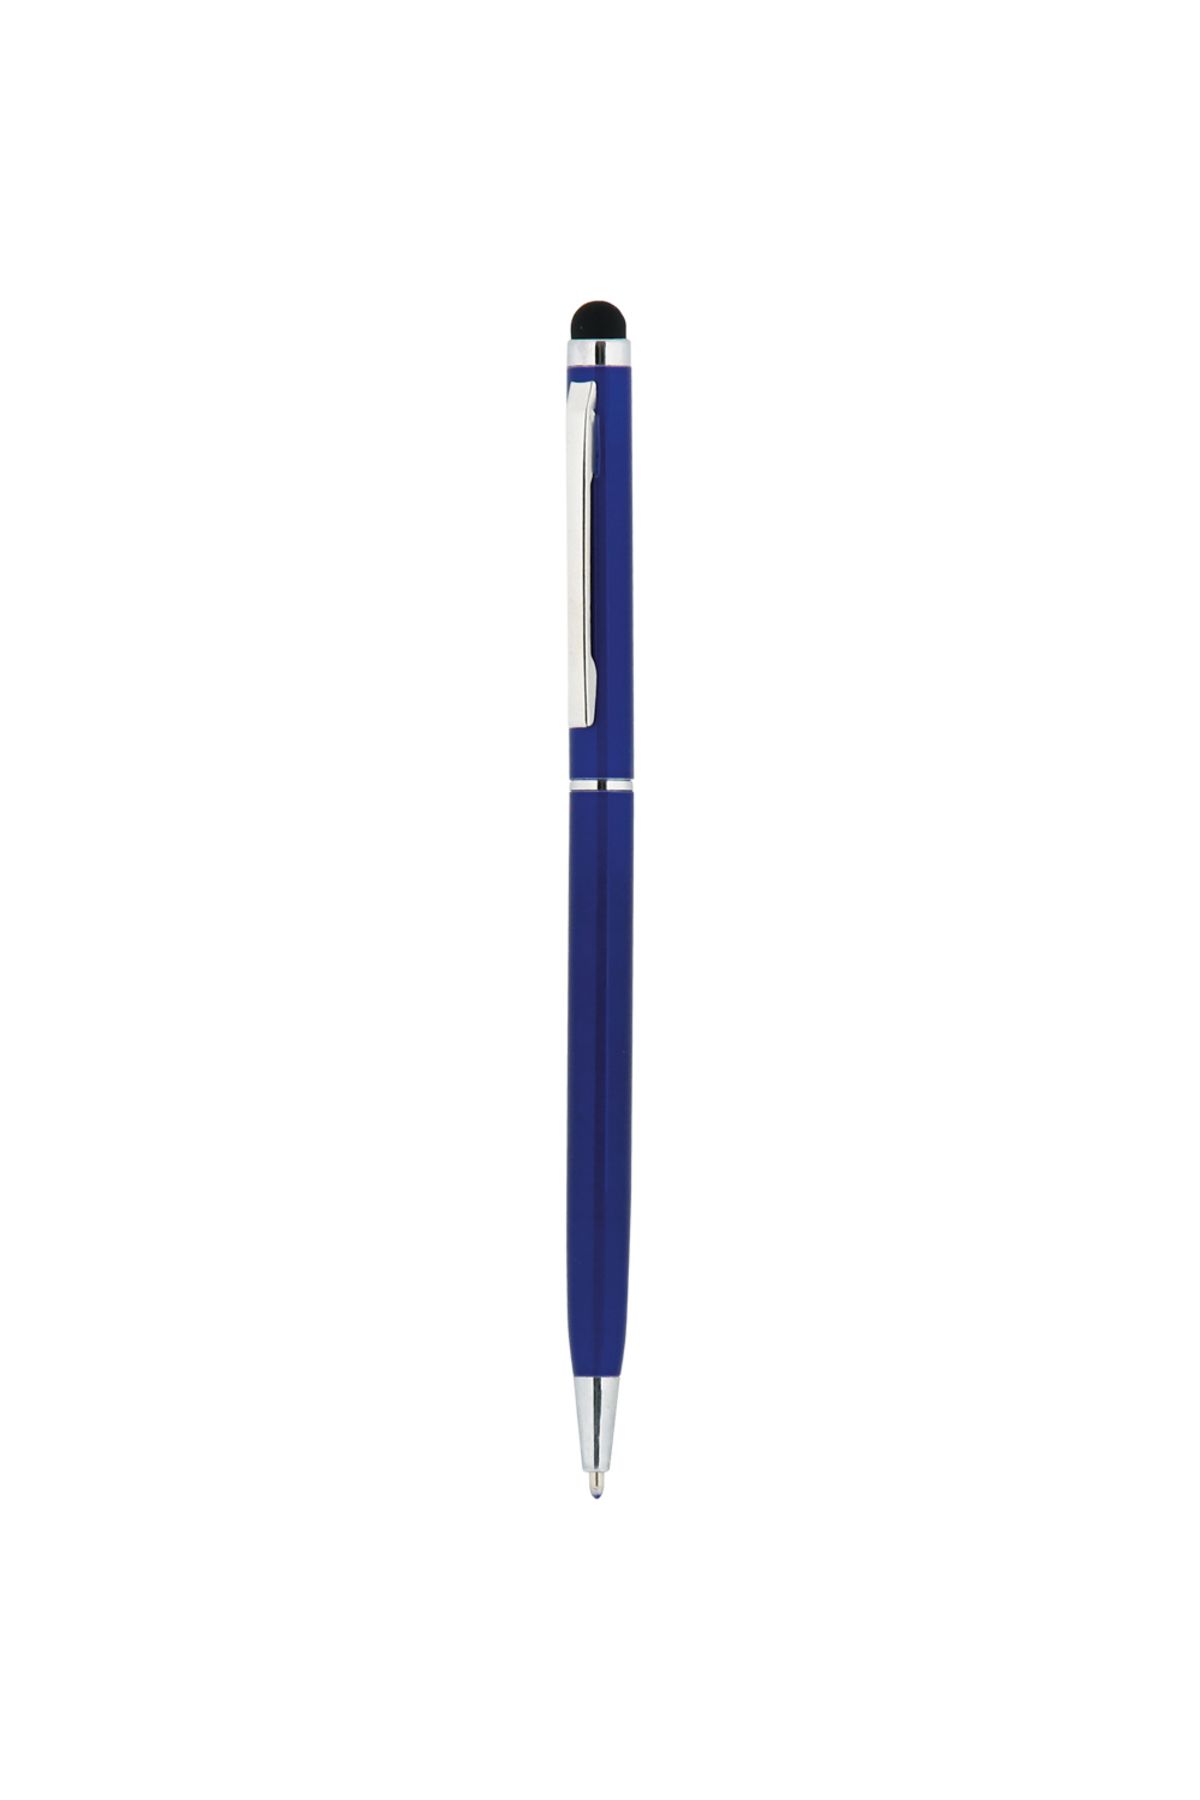 GALERİ AKİDE Kalem / Dokunmatik Kalem - Tükenmez Kalem